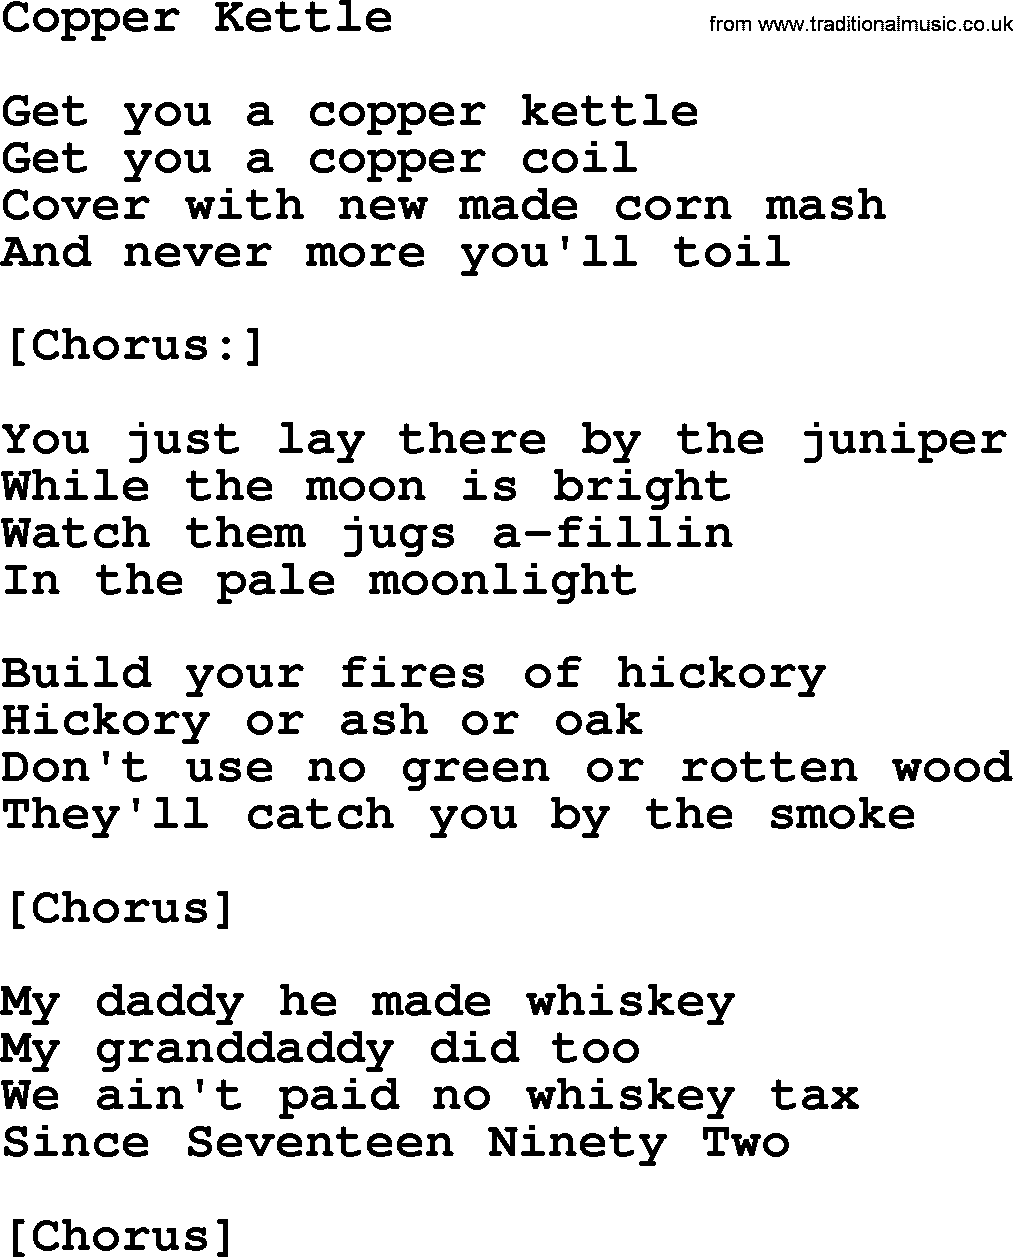 Joan Baez song Copper Kettle, lyrics